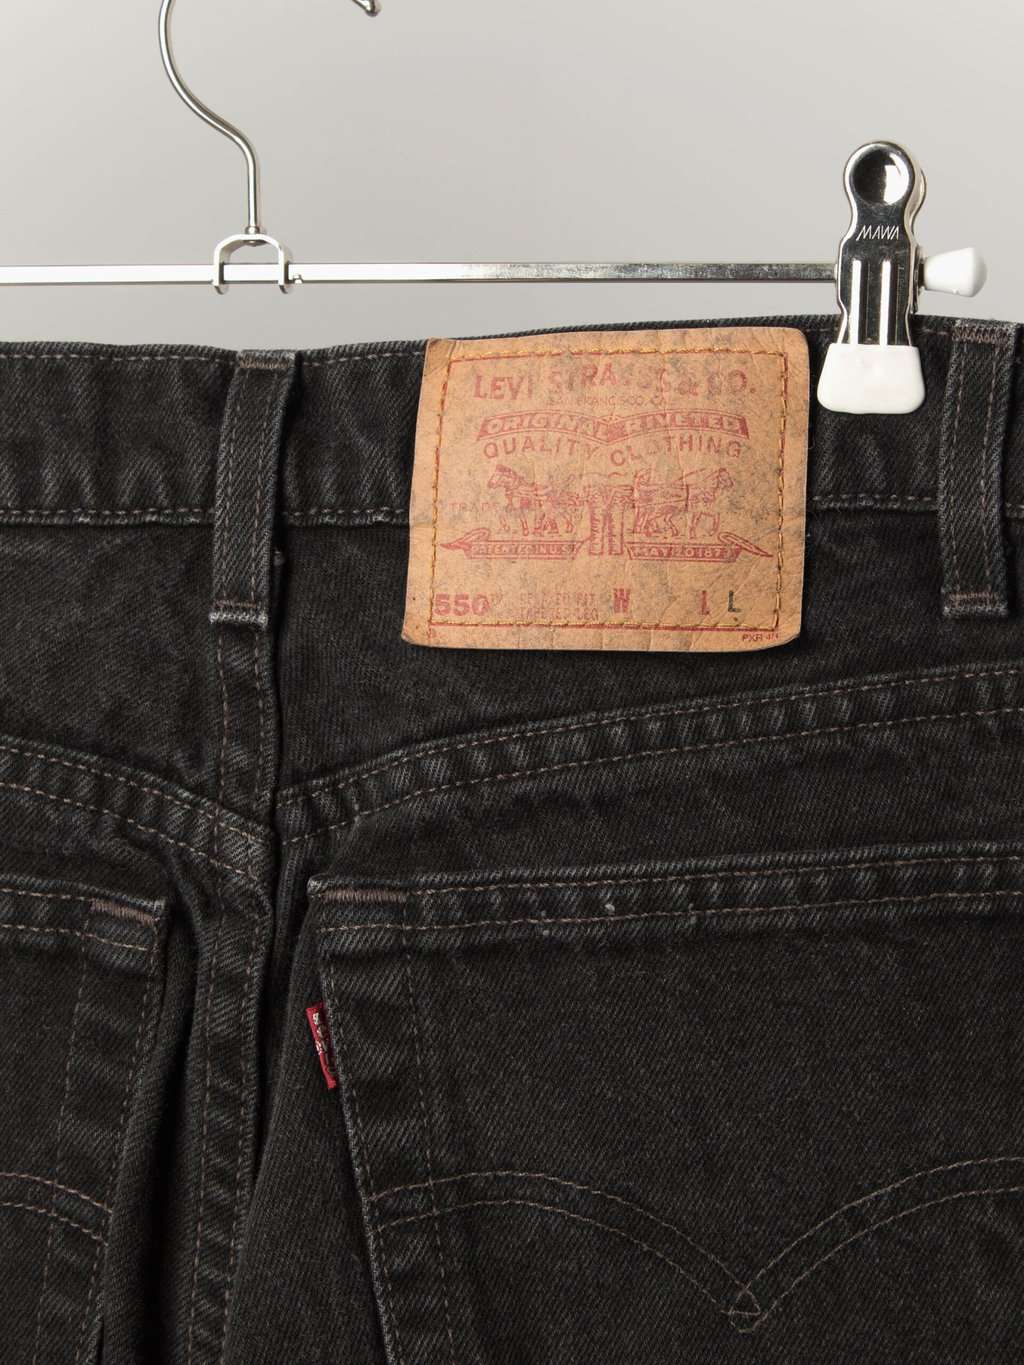 90s Vintage Levis 550 jeans stonewash grey black Made in USA - W28 x L32 -  St Cyr Vintage